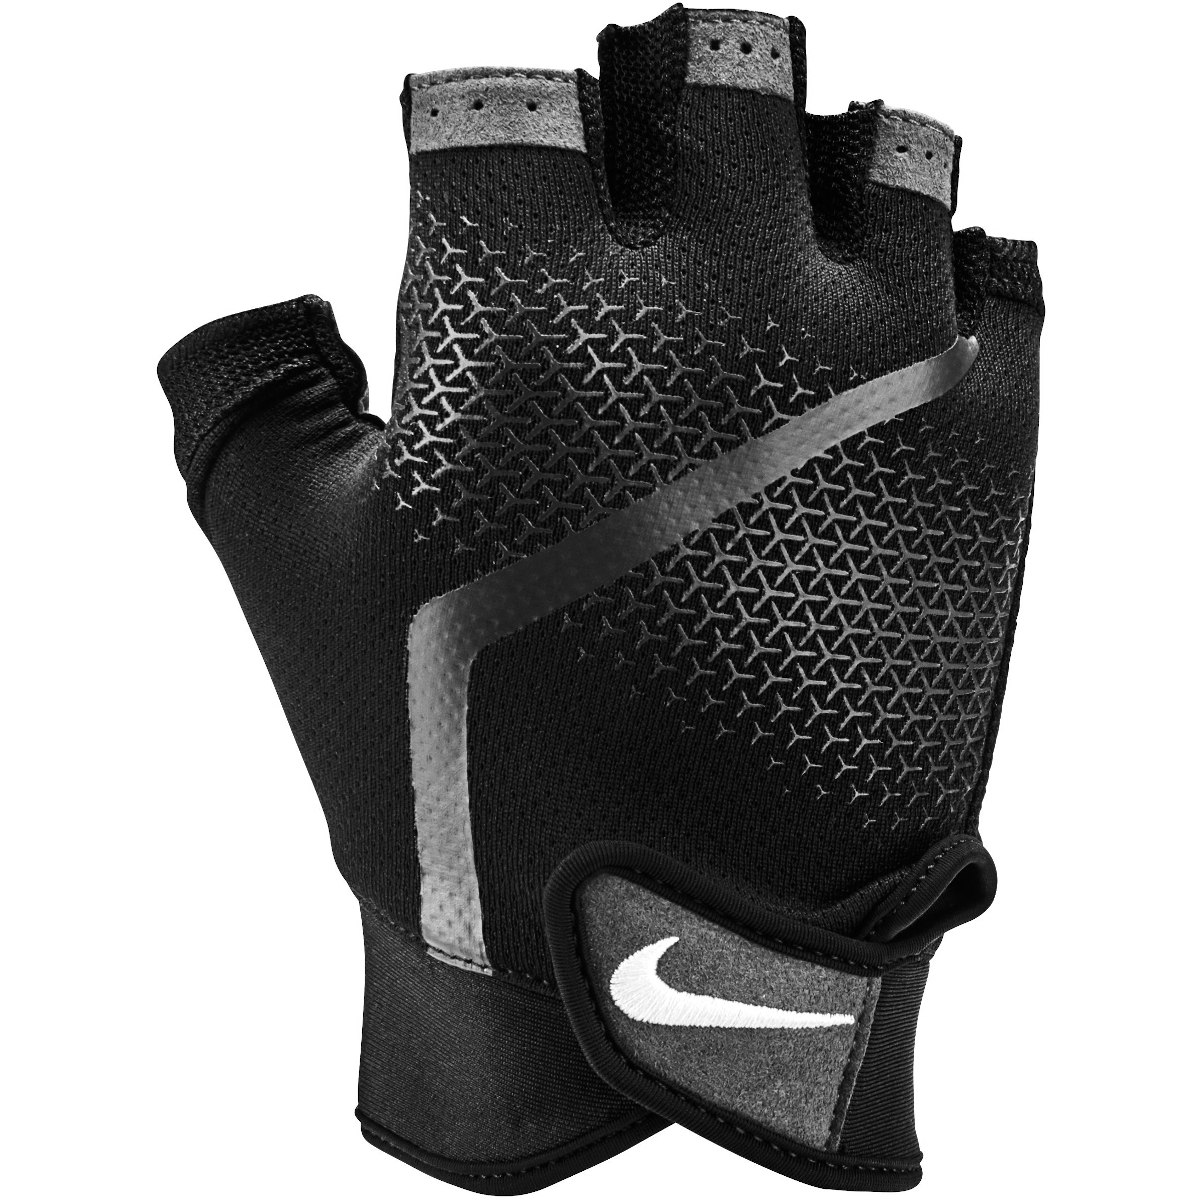 Productfoto van Nike Heren Extreme Fitness-Handschoenen - black/anthracite/white 945